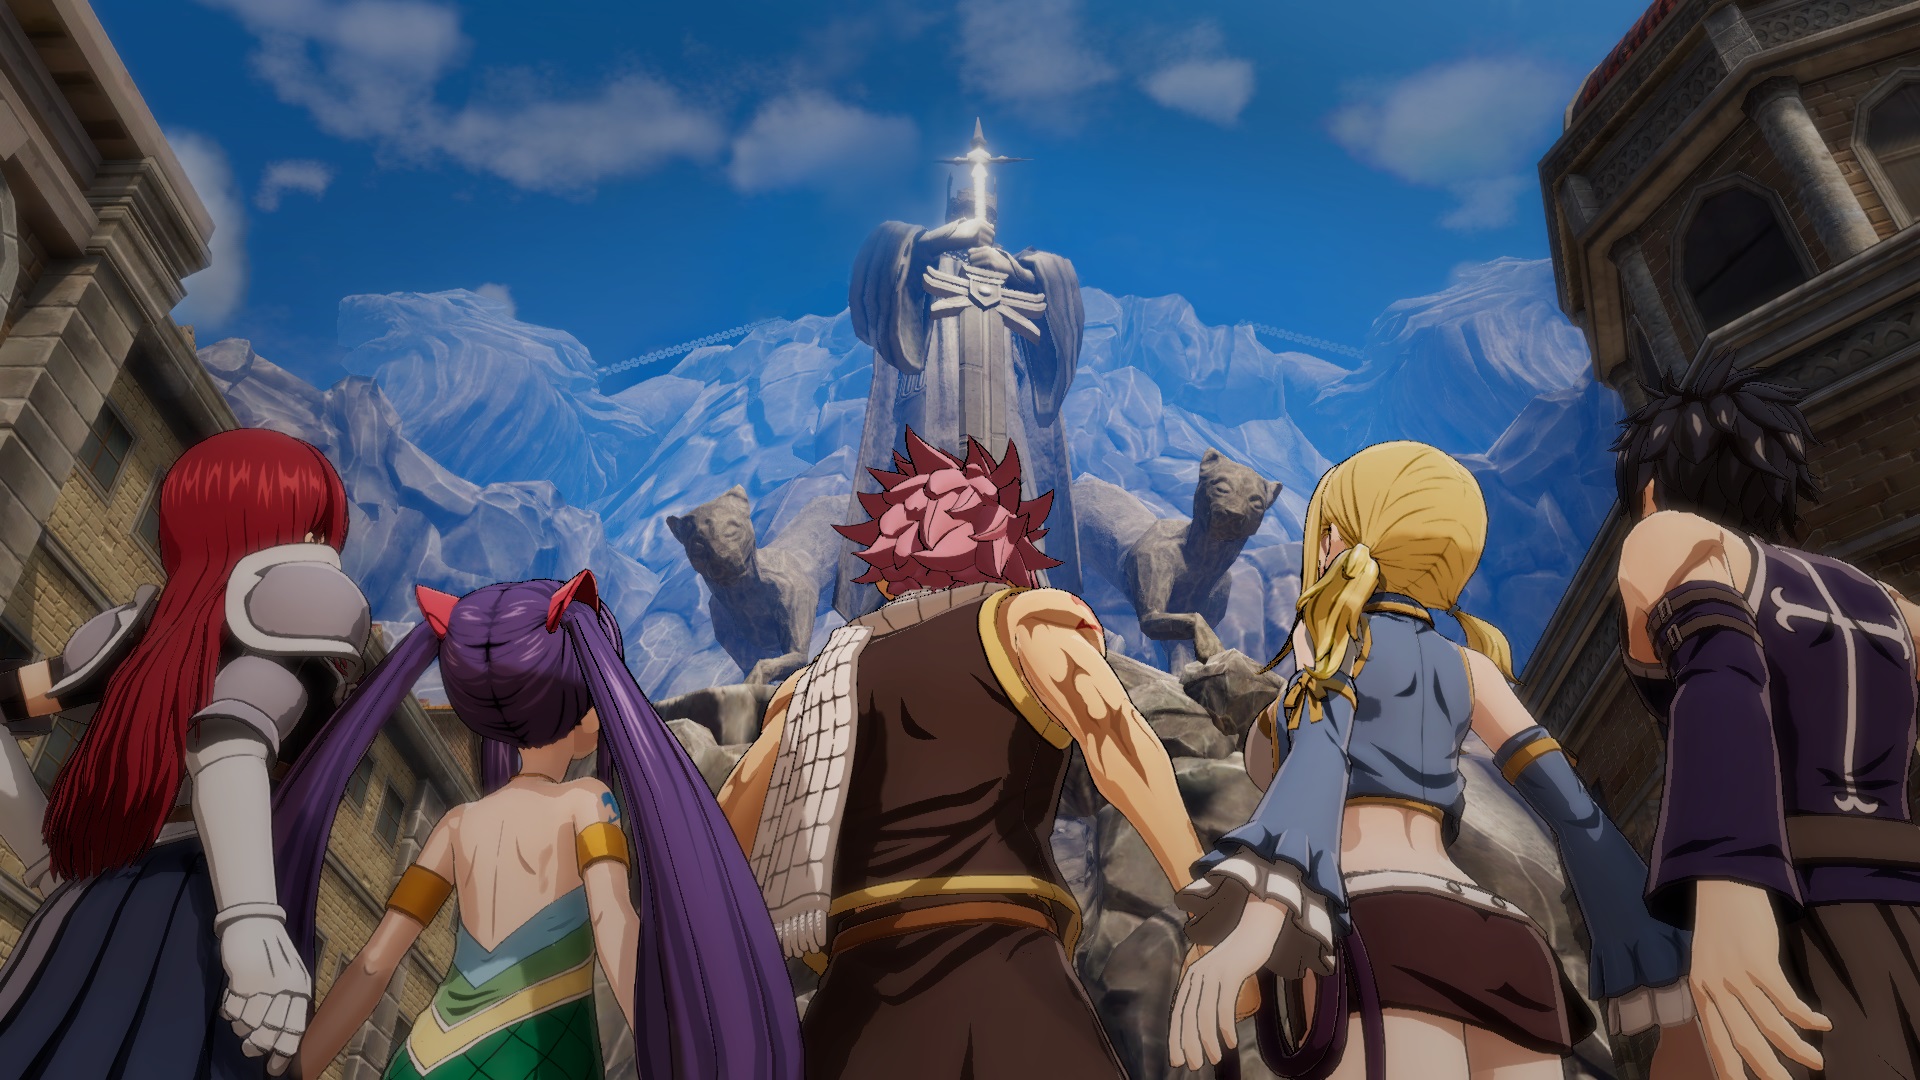 Fairy Tail RPG Screenshots Reveal Juvia and Gajeel, Game Will Be